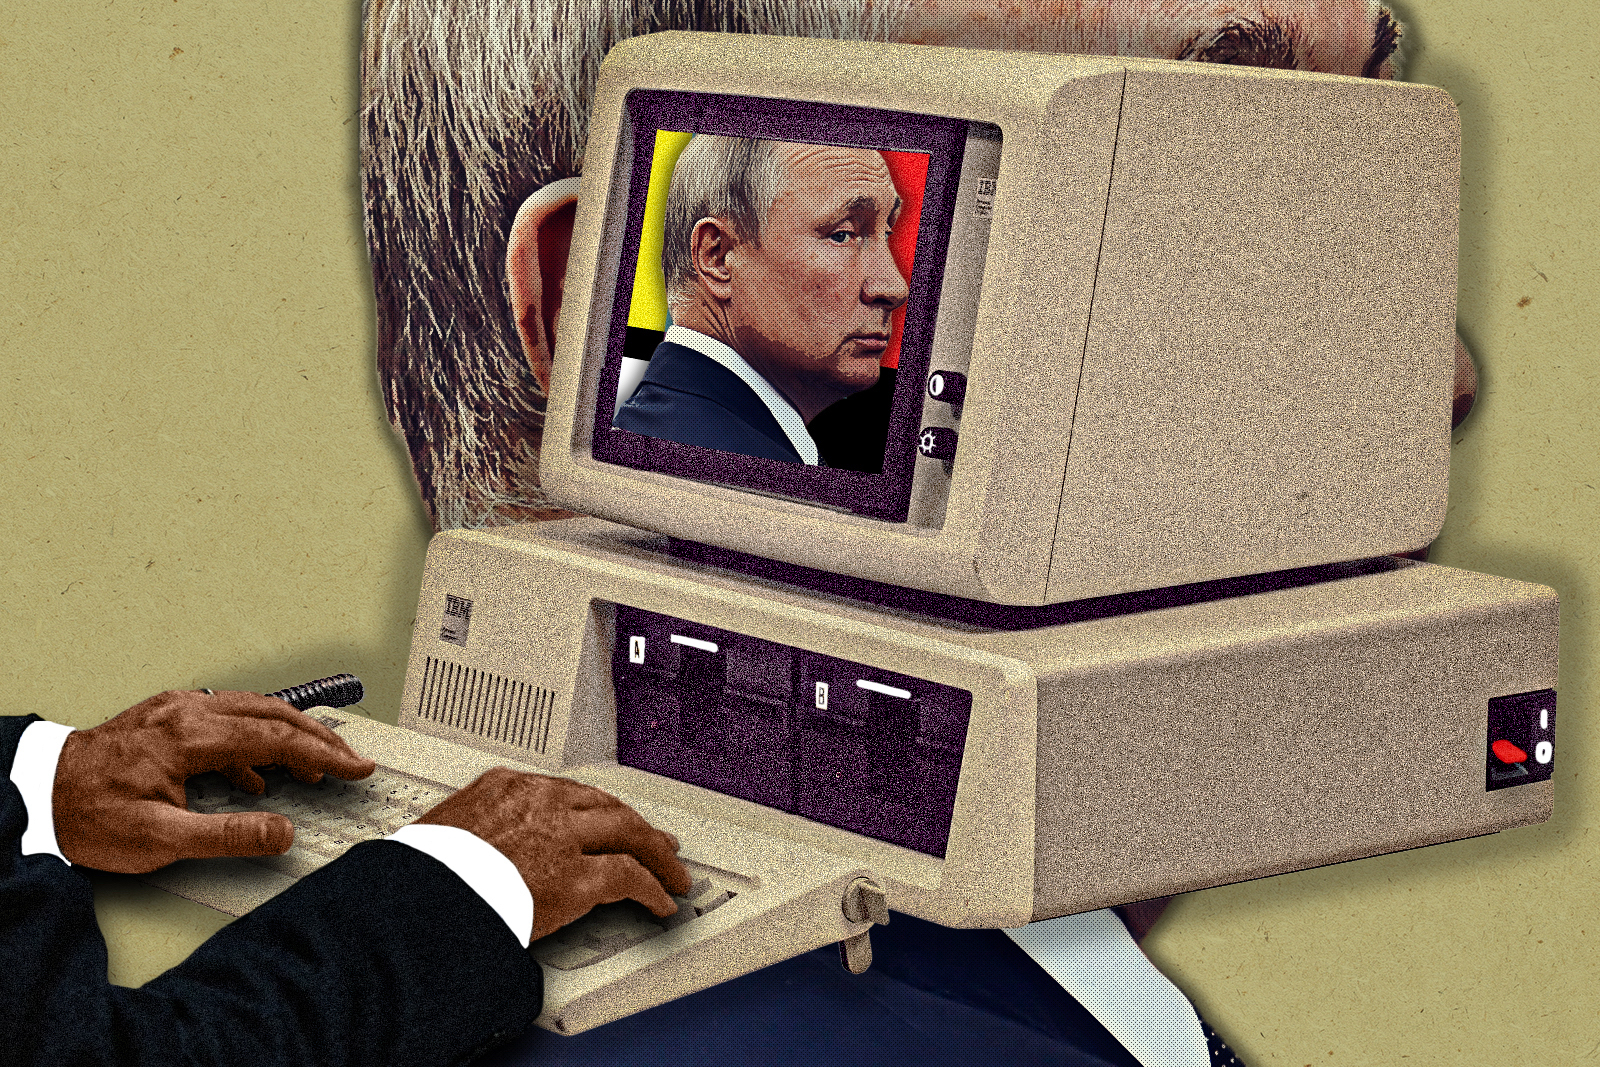 Russian President Vladimir Putin cyberwarfare